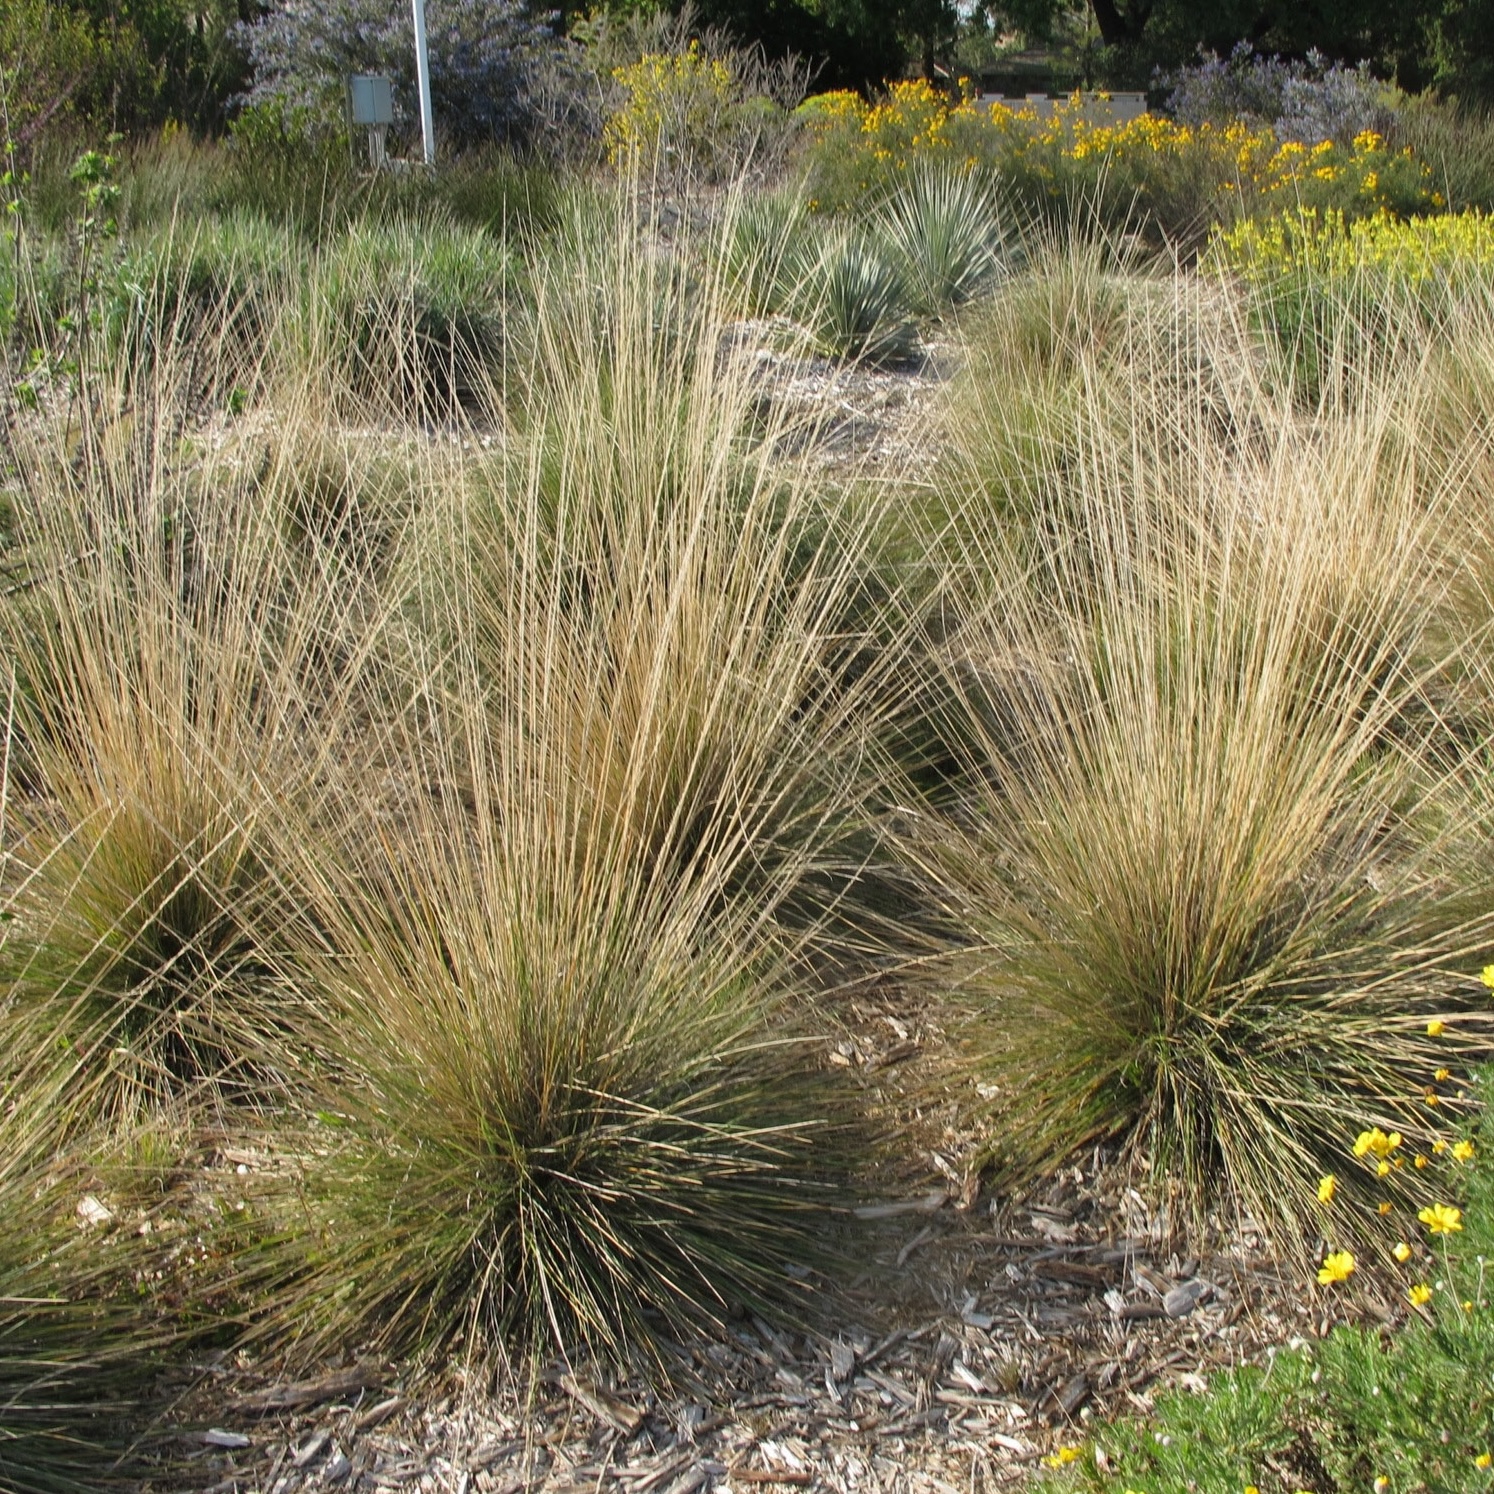 A round spiky grass